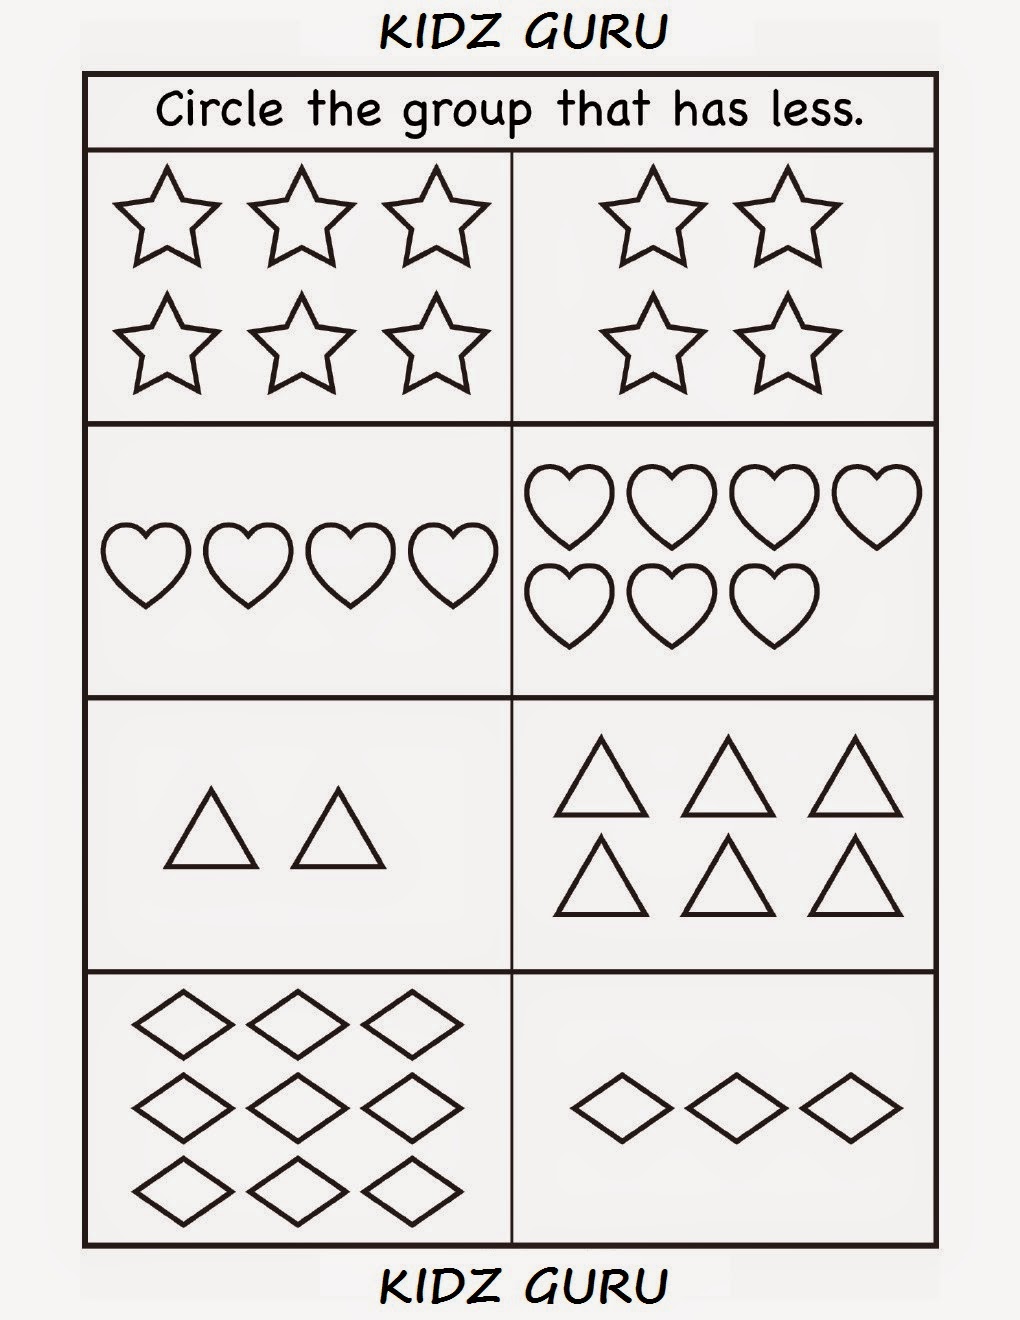 Kindergarten Worksheets: Printable Worksheets - Circle the group